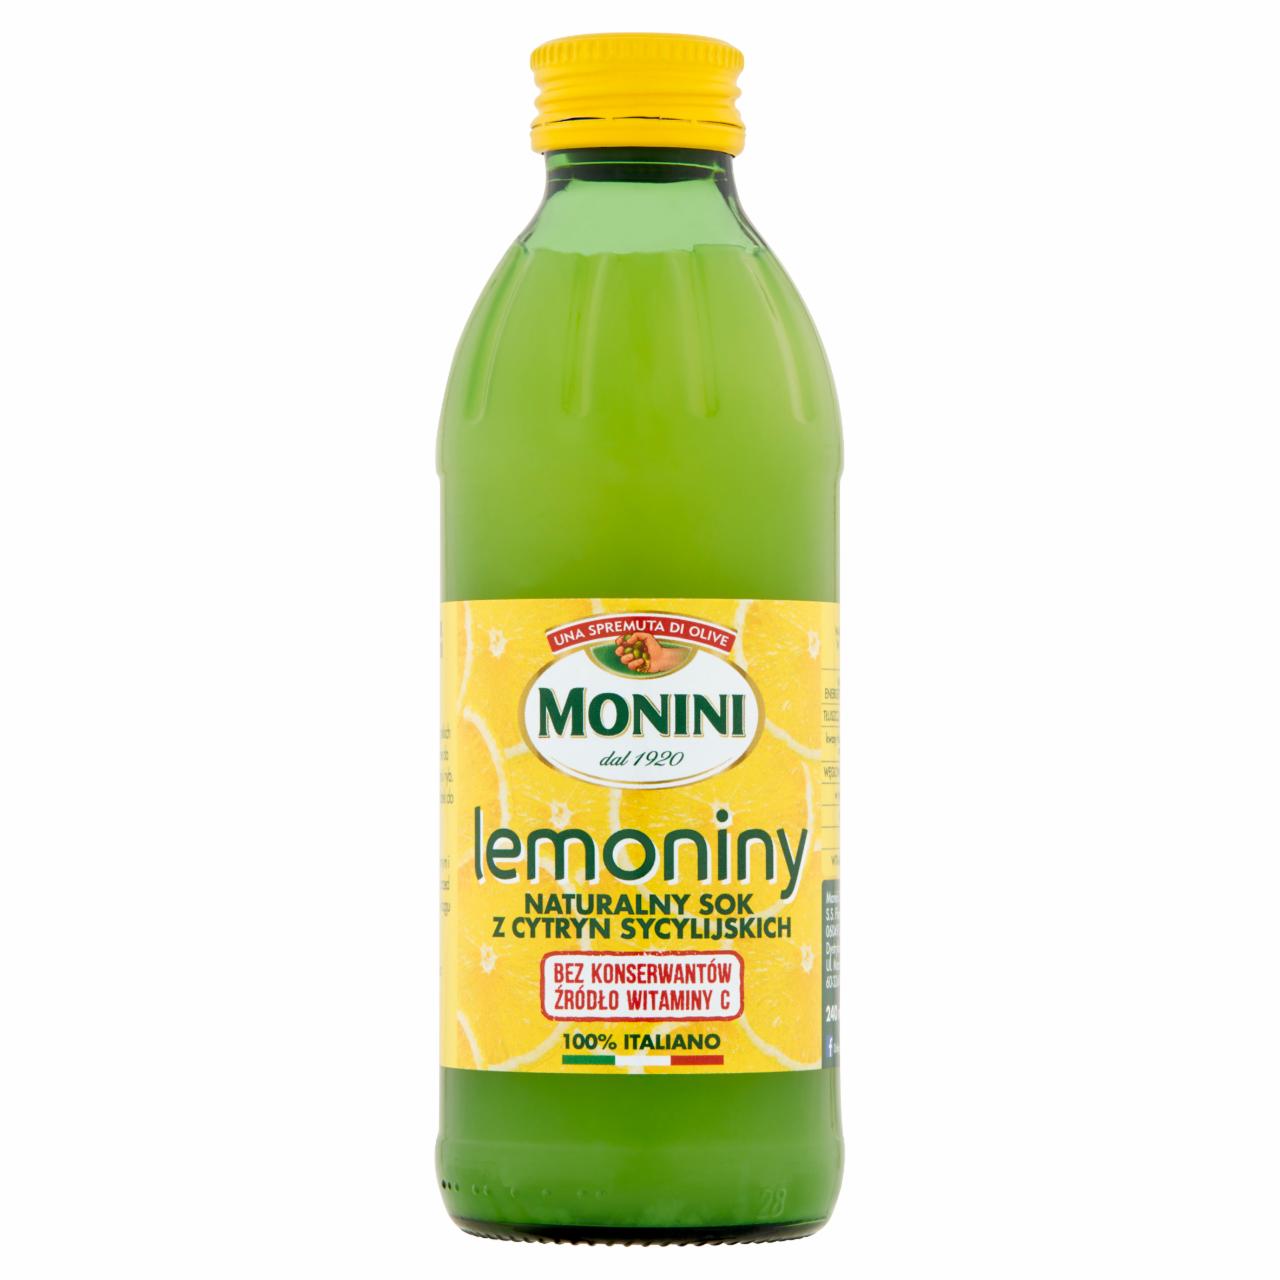 Zdjęcia - Monini Lemoniny Naturalny sok z cytryn sycylijskich 240 ml